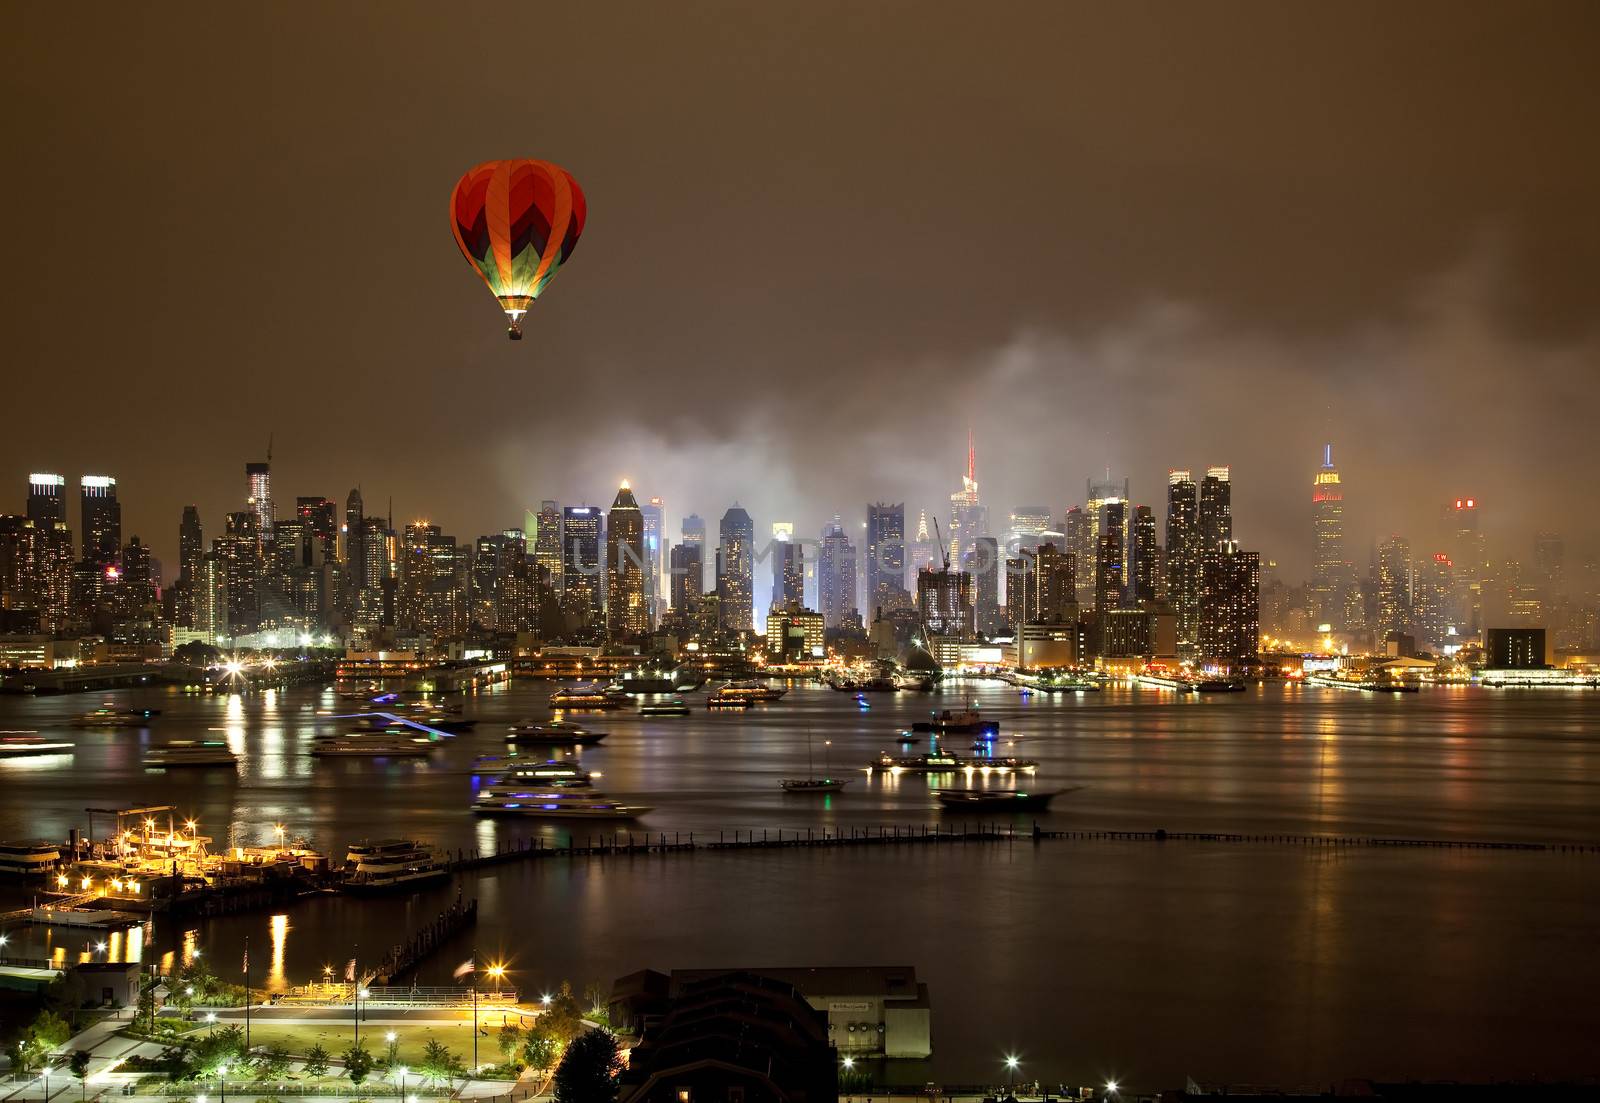 The New York City Skyline by gary718